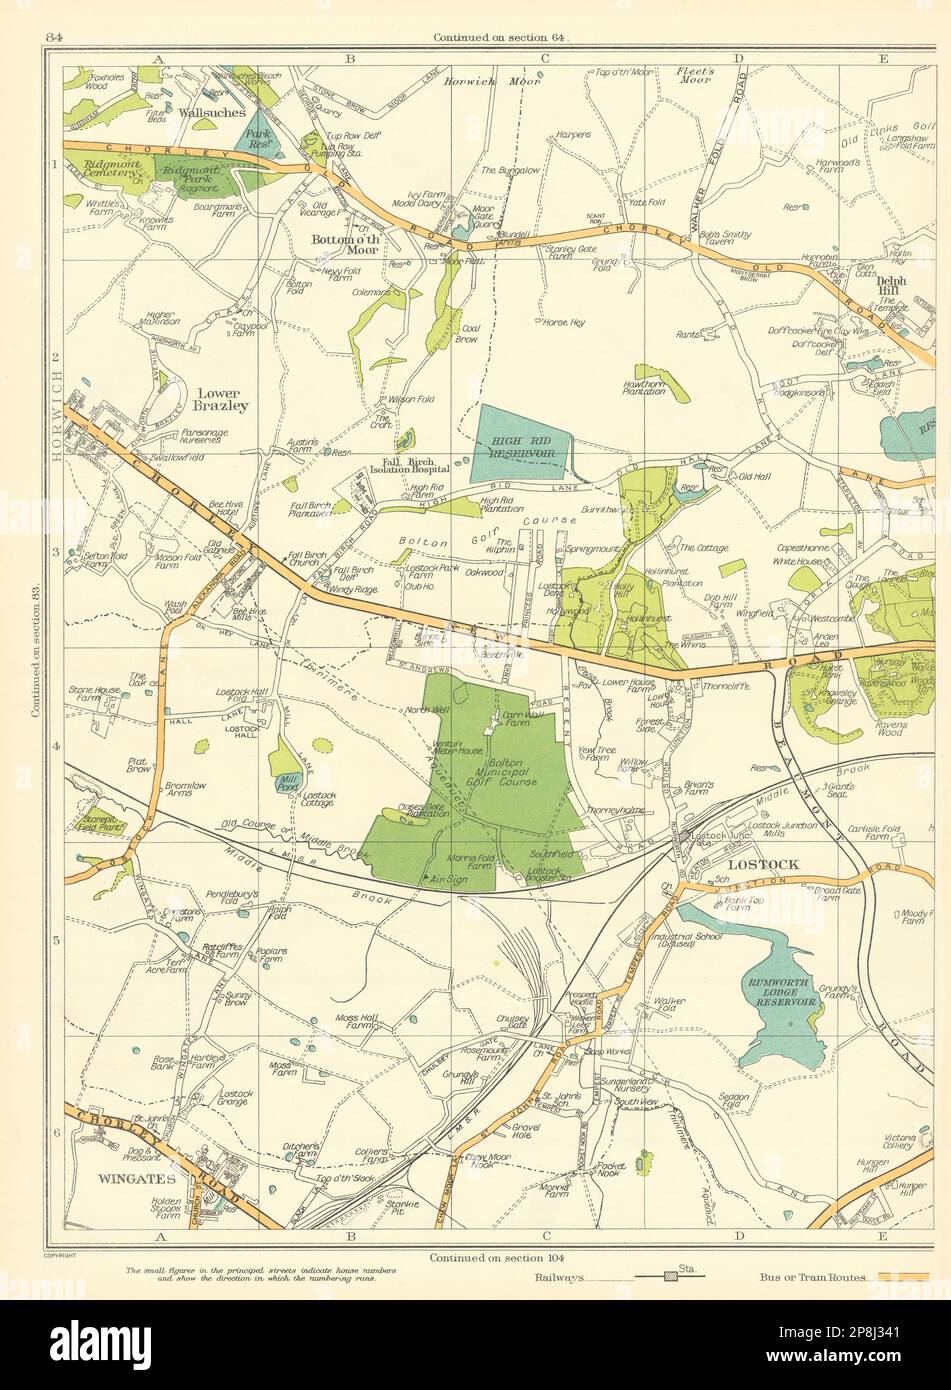 LANCASHIRE Bolton Lostock Wingates Lower Brazley Bottom O'Th' Moor 1935 map Stock Photo